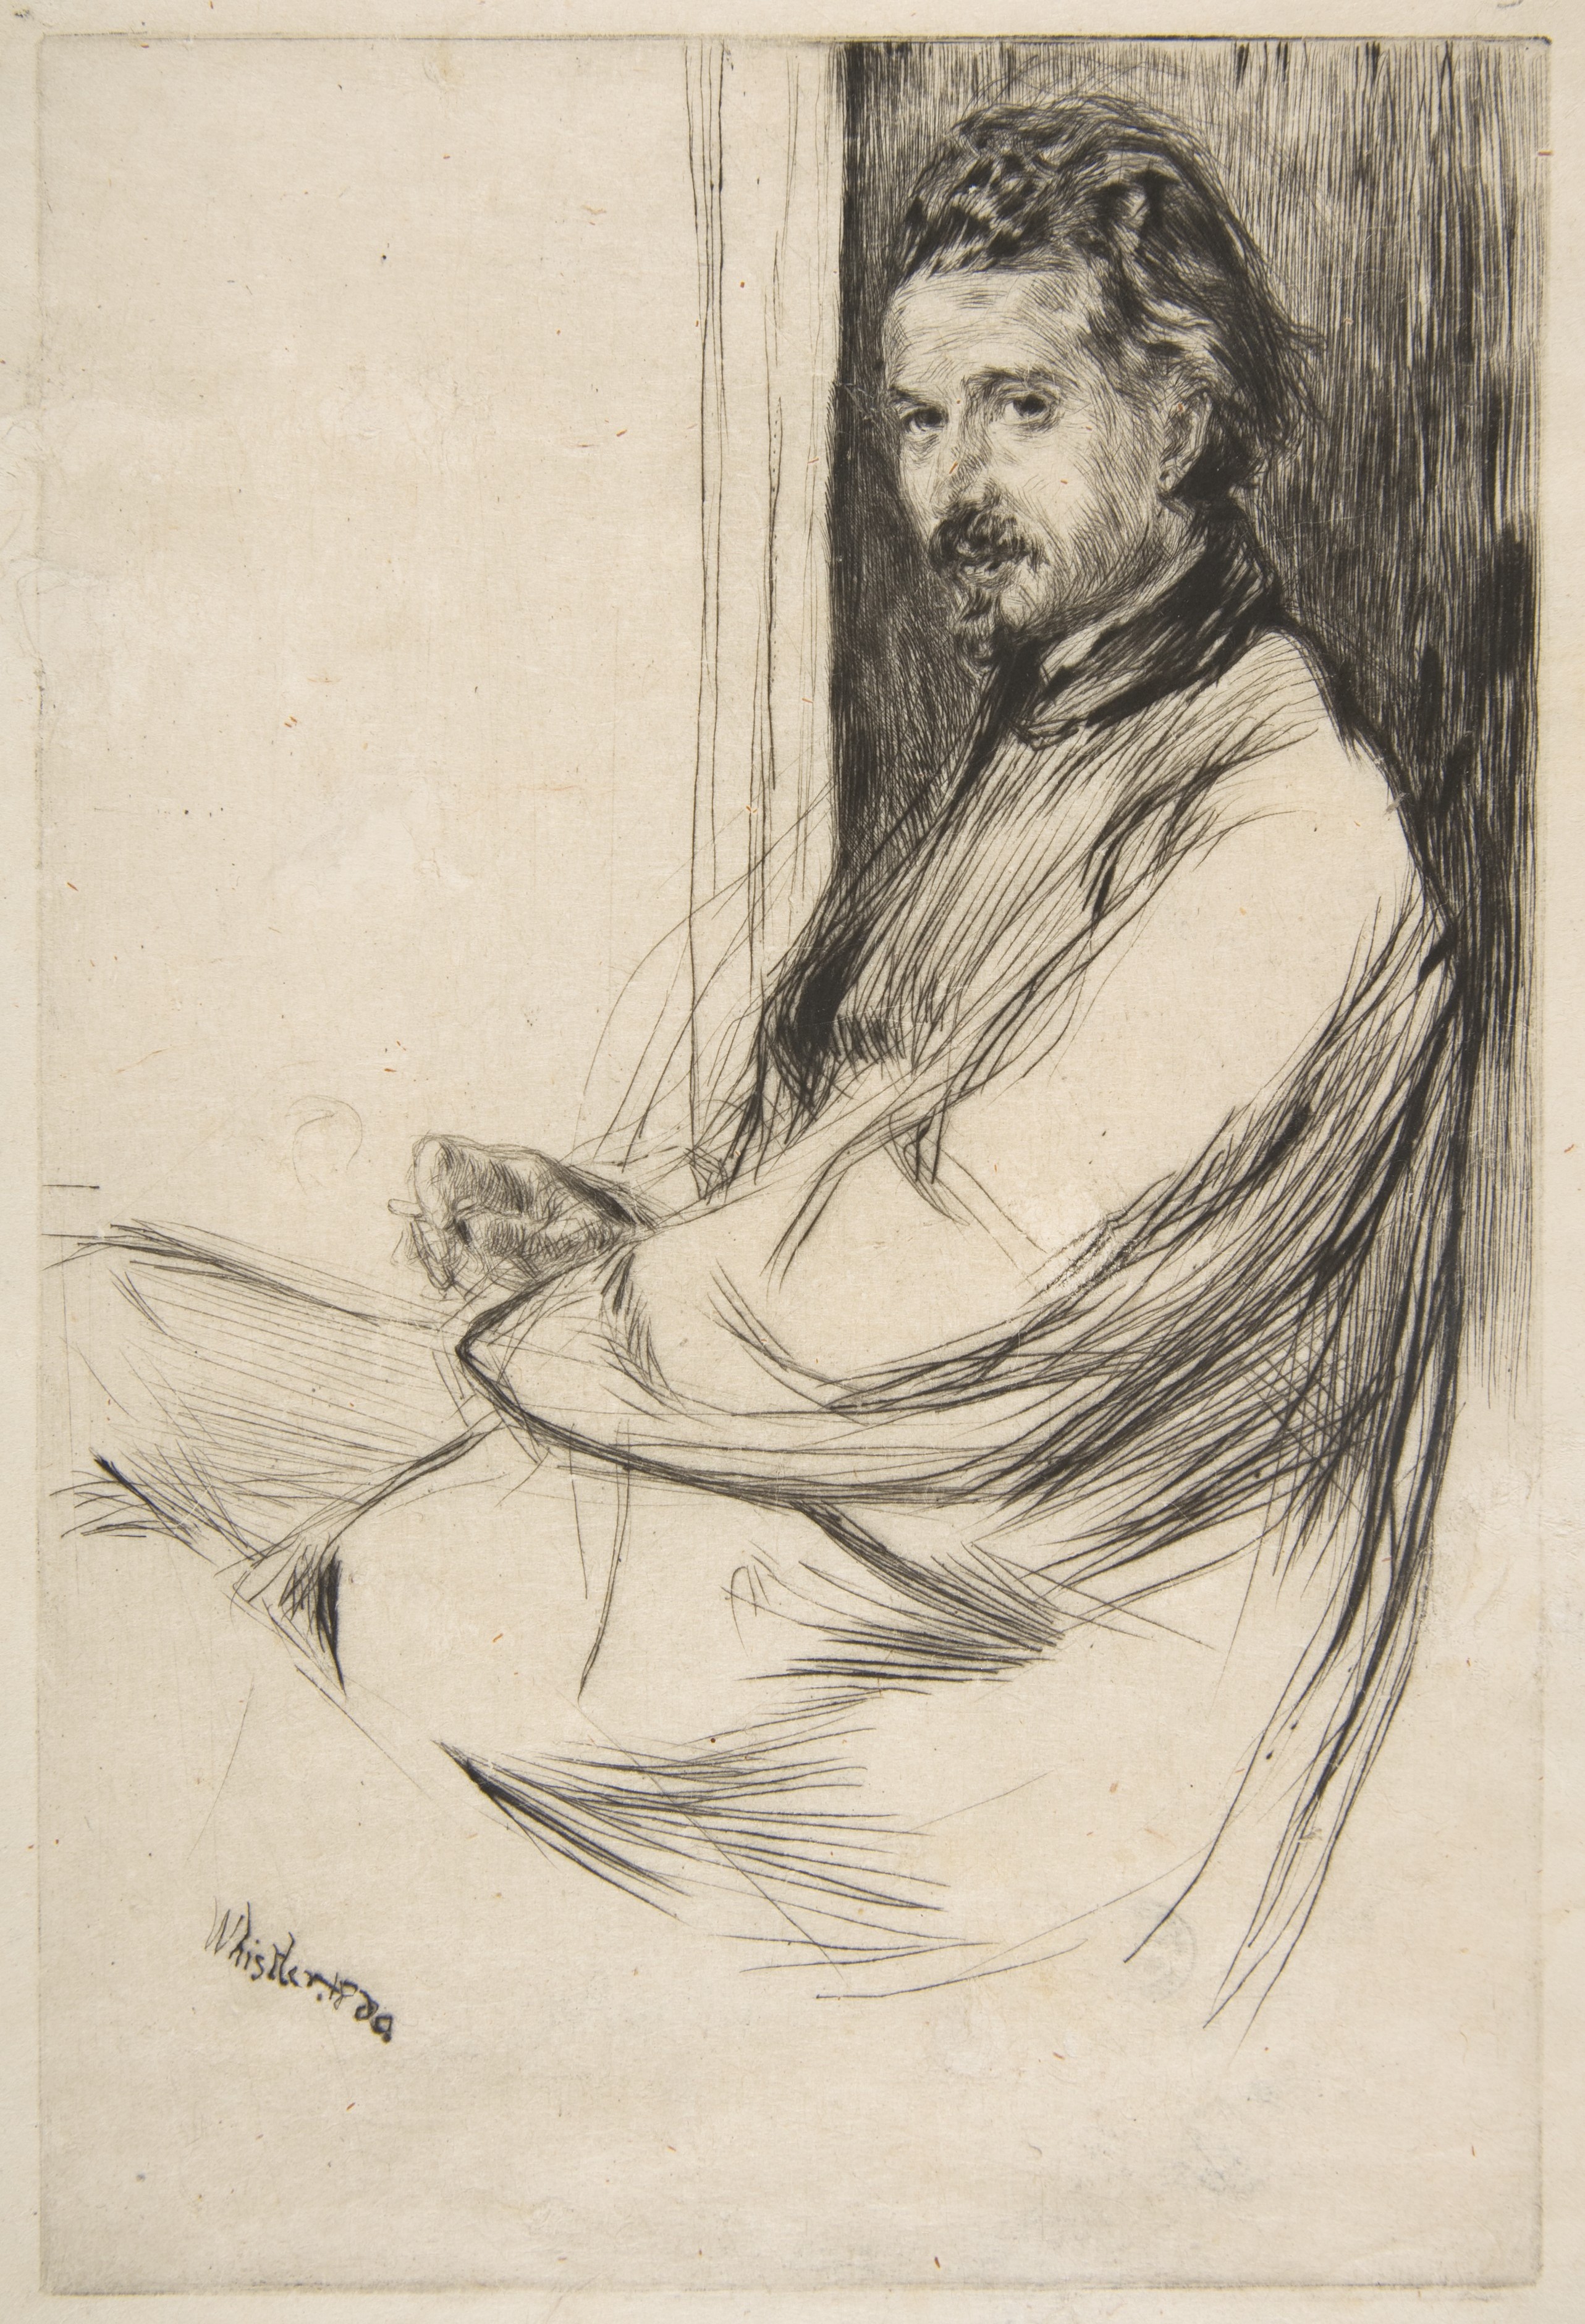 James McNeill Whistler | Axenfeld | The Metropolitan Museum of Art